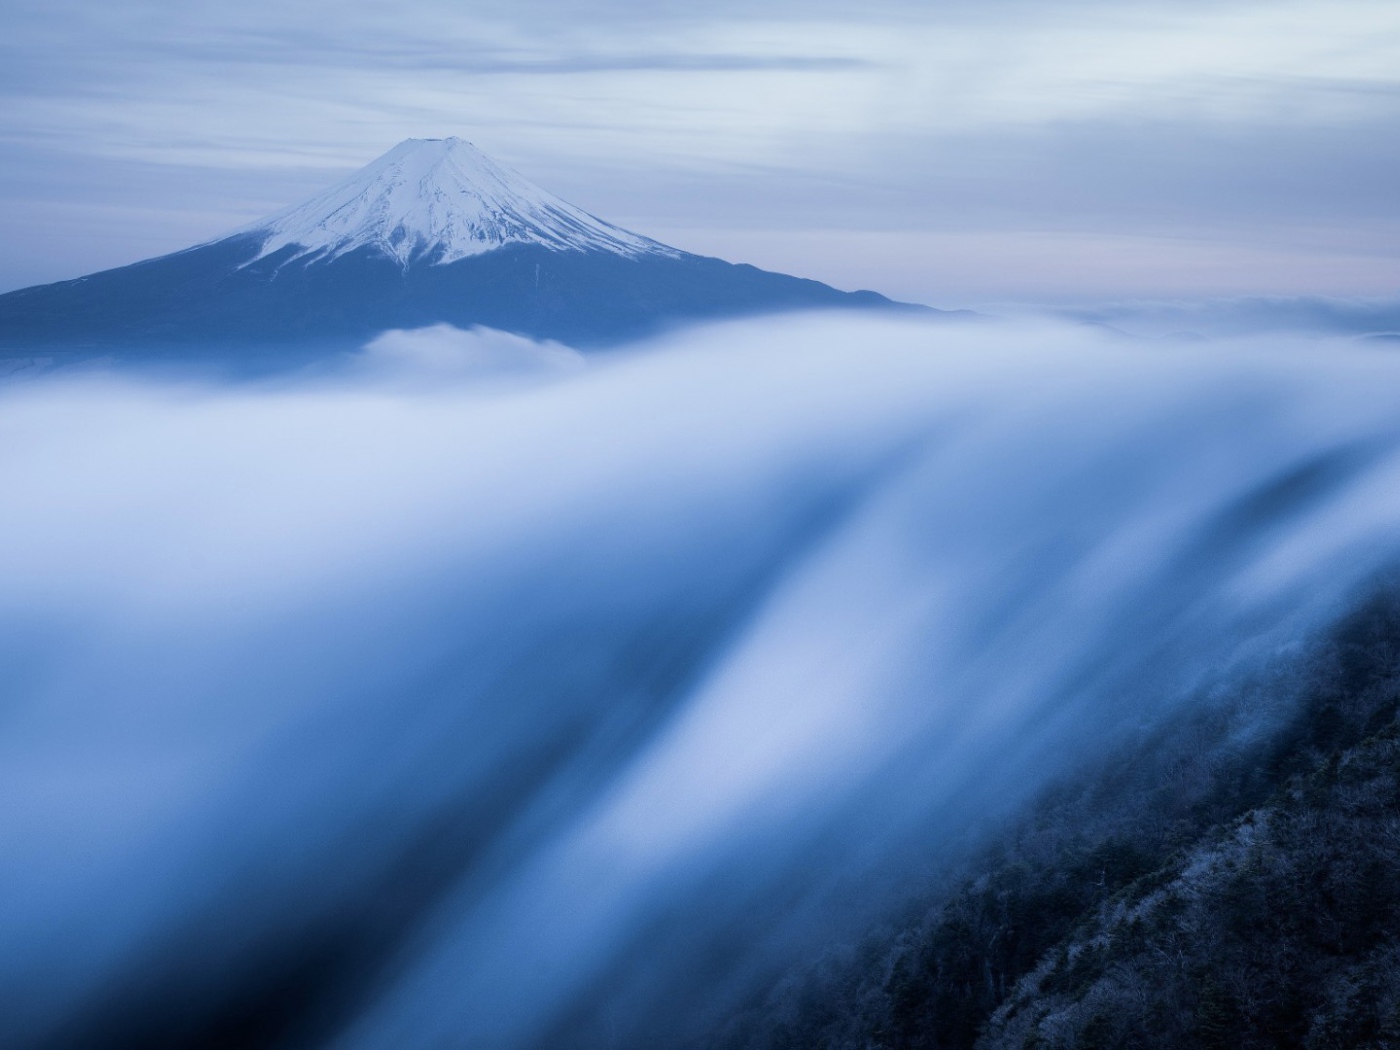 The mist flows down the mountainside, Japan